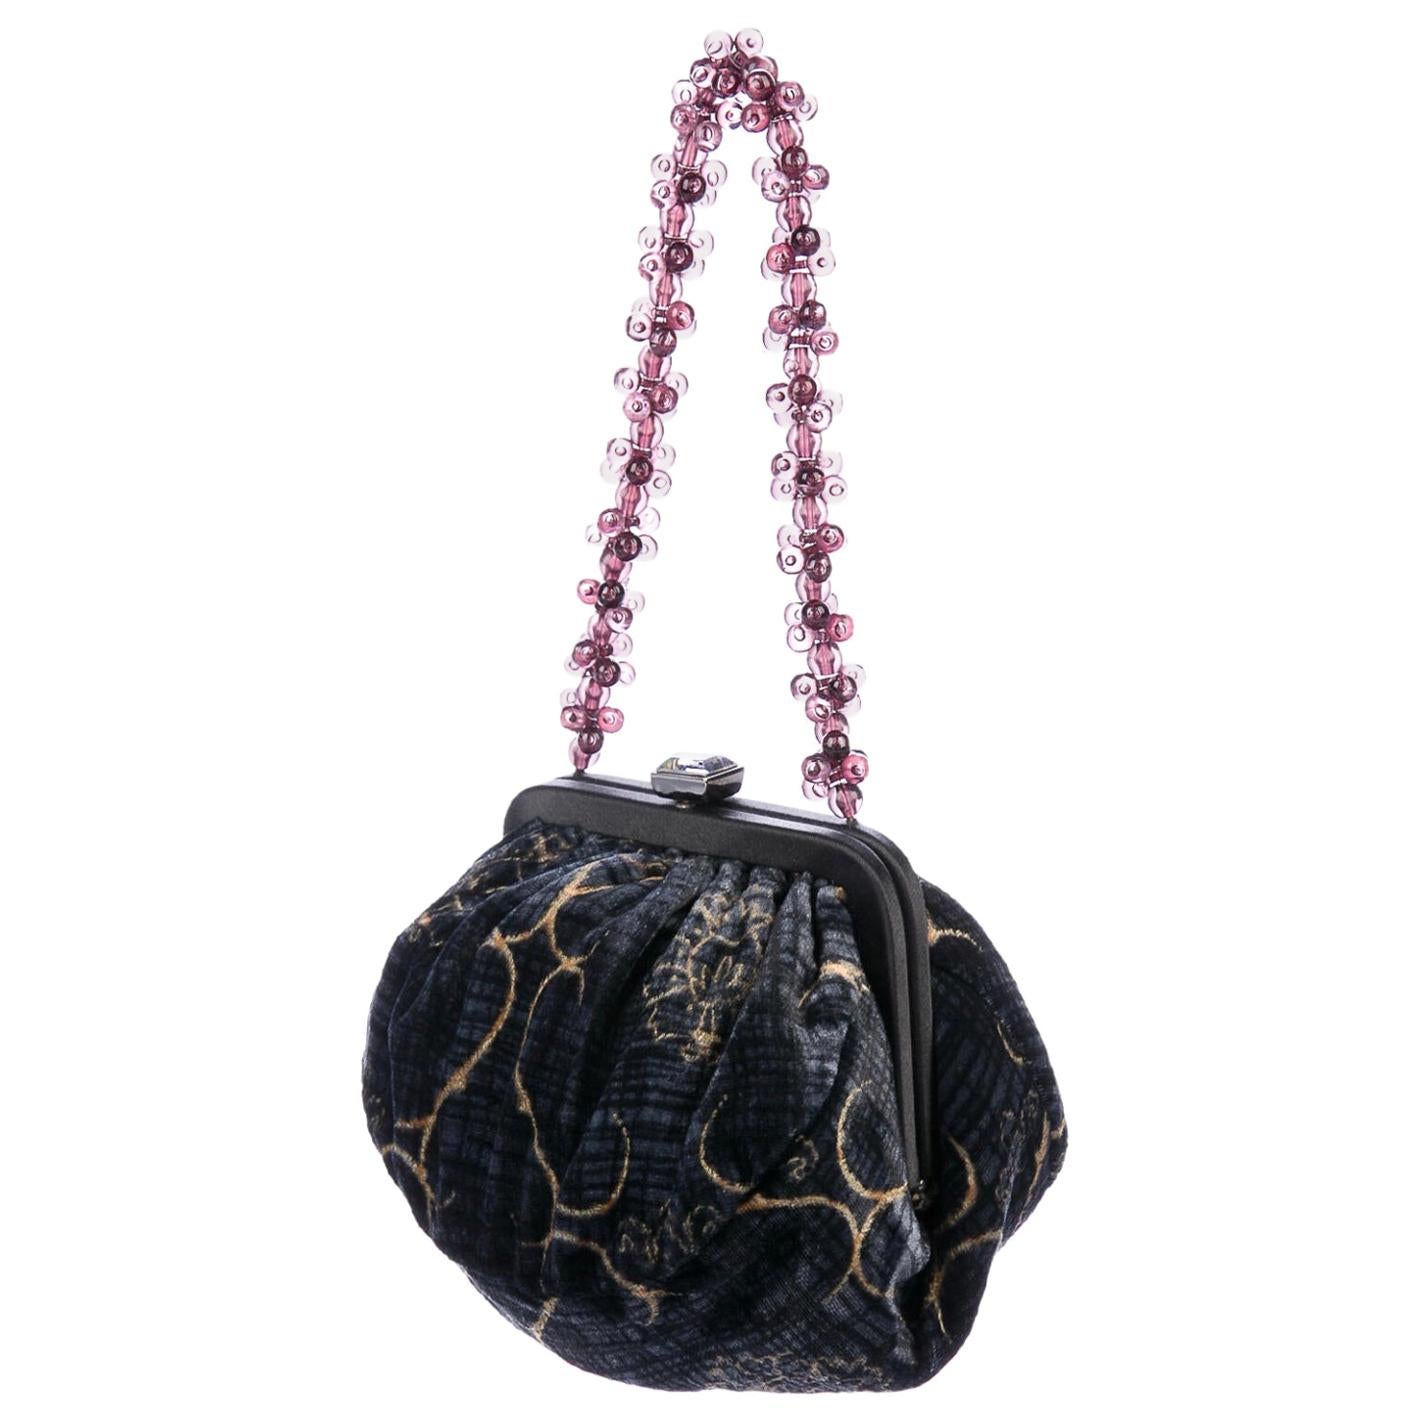 Beaded black evening bag 1960s purse floral design chain strap